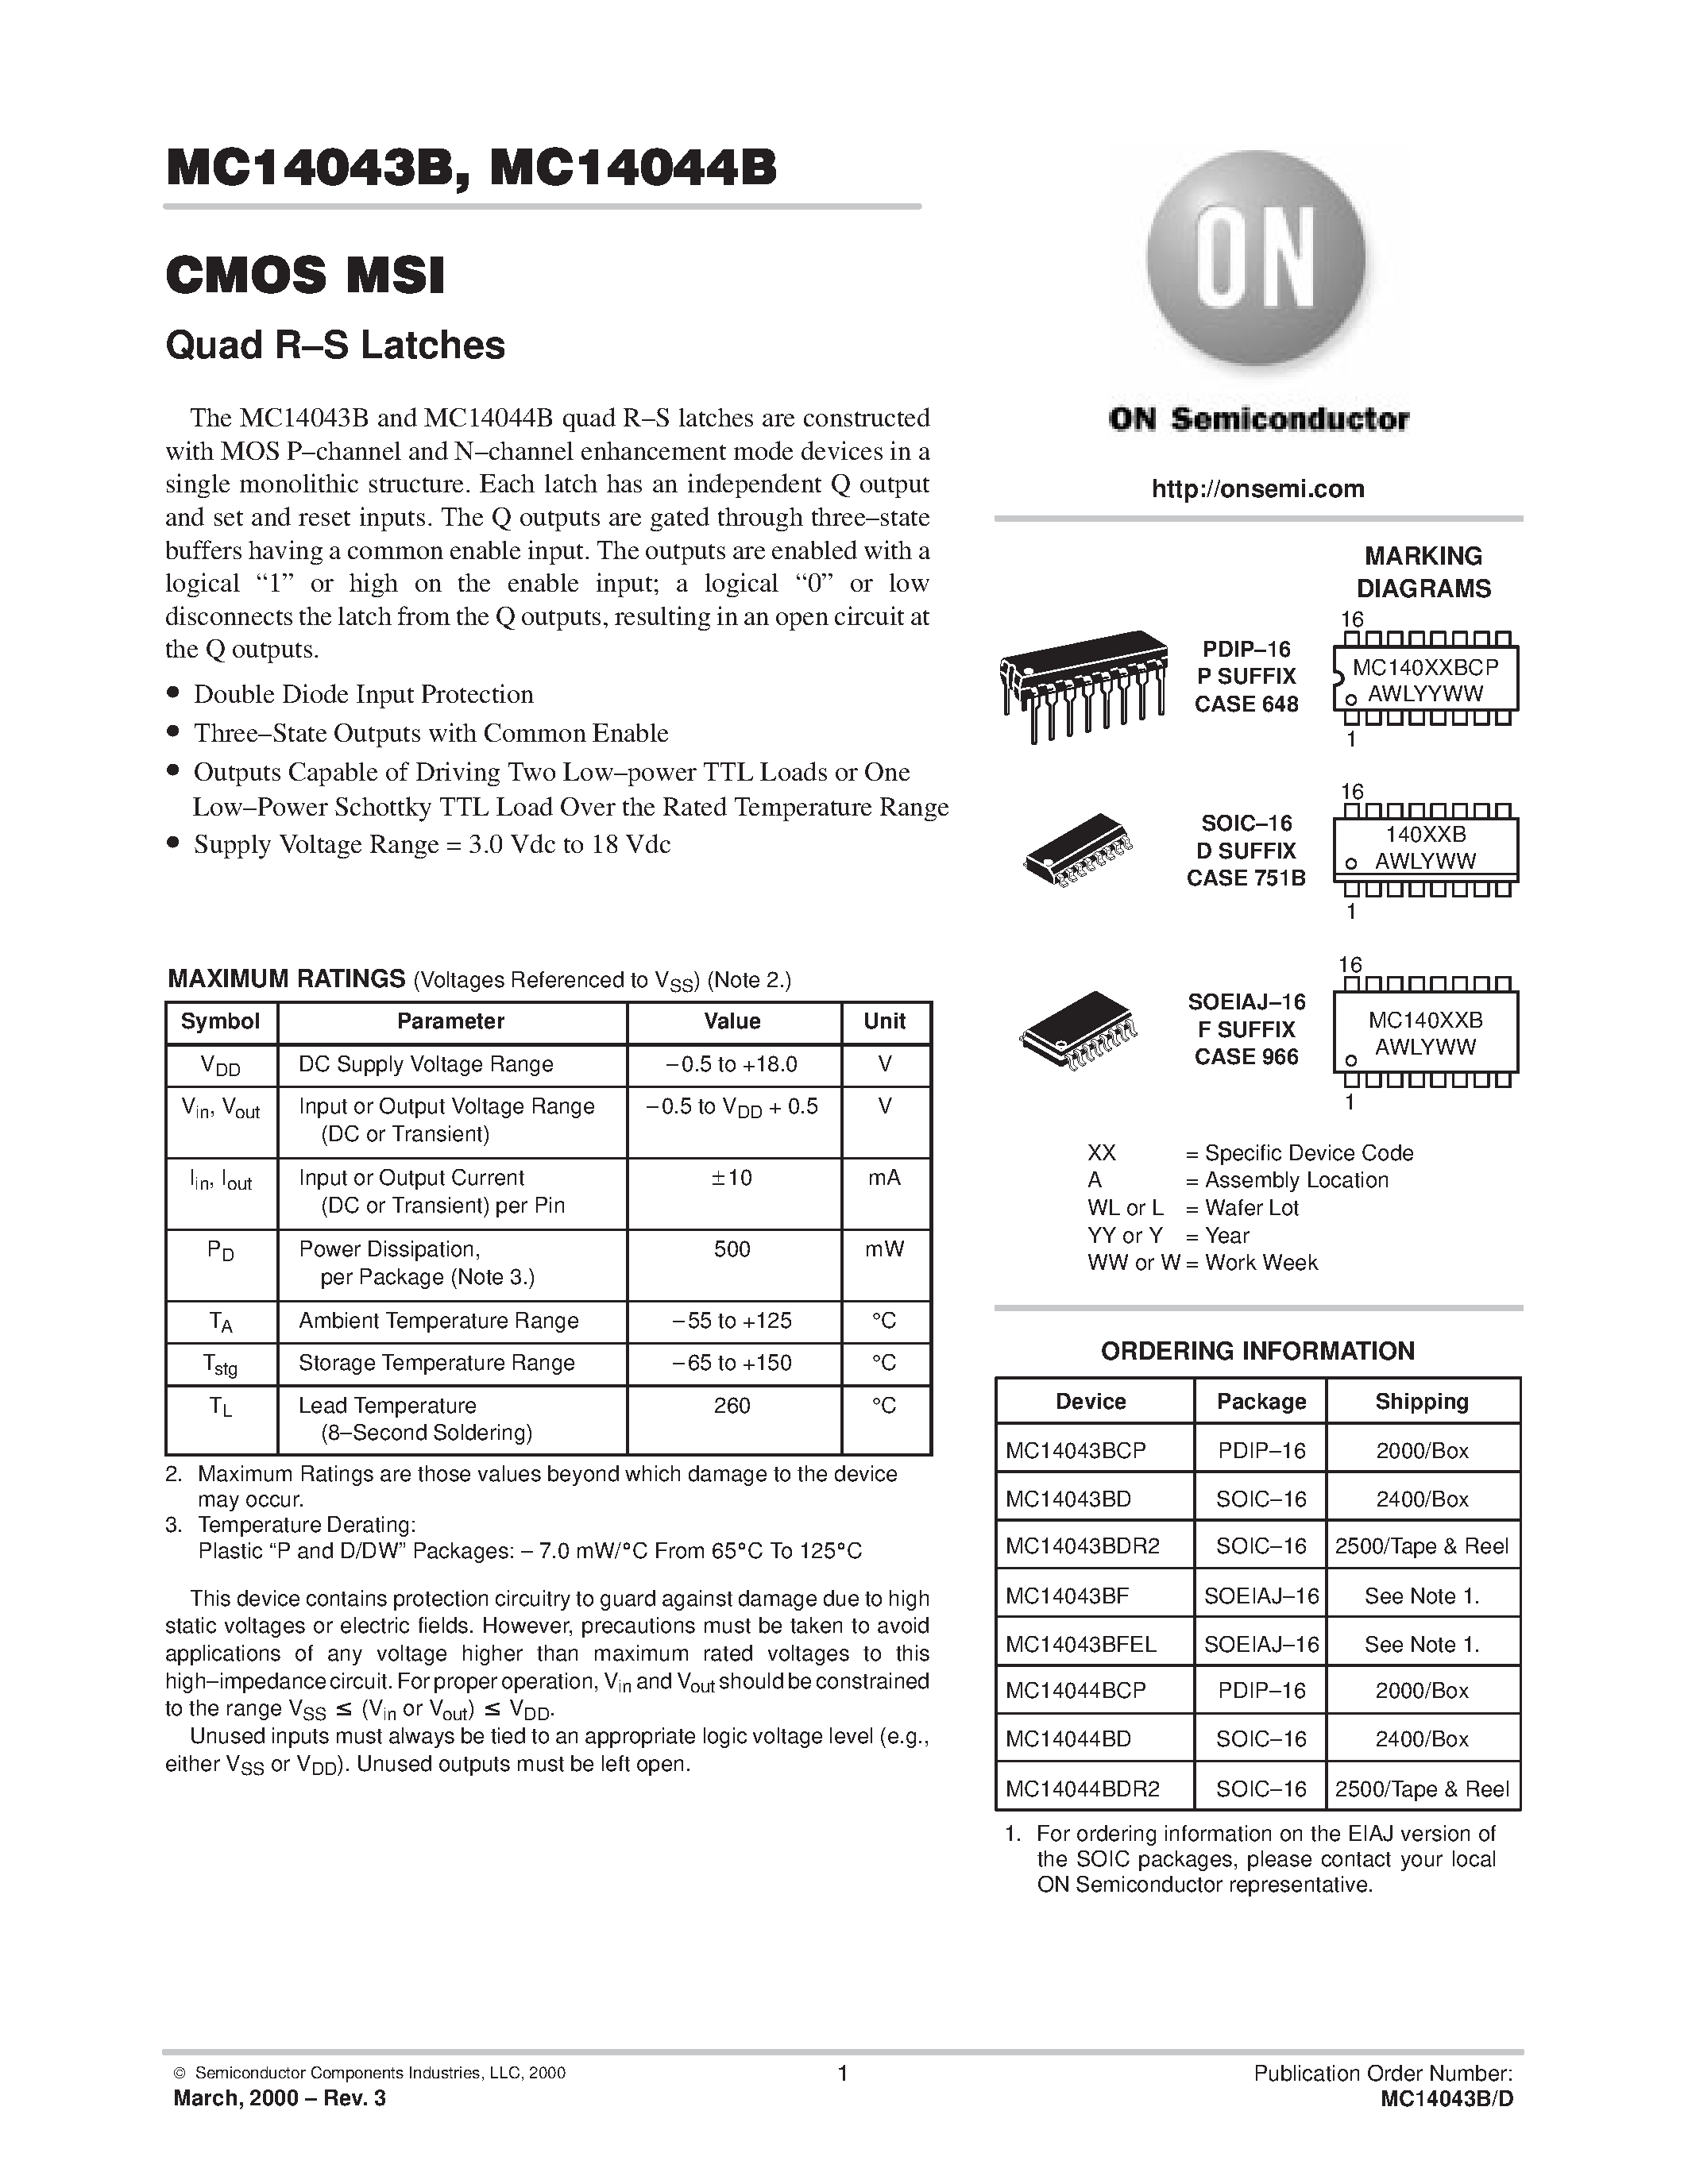 Datasheet MC14043BFEL - CMOS MSI(Quad R-S Latches) page 1